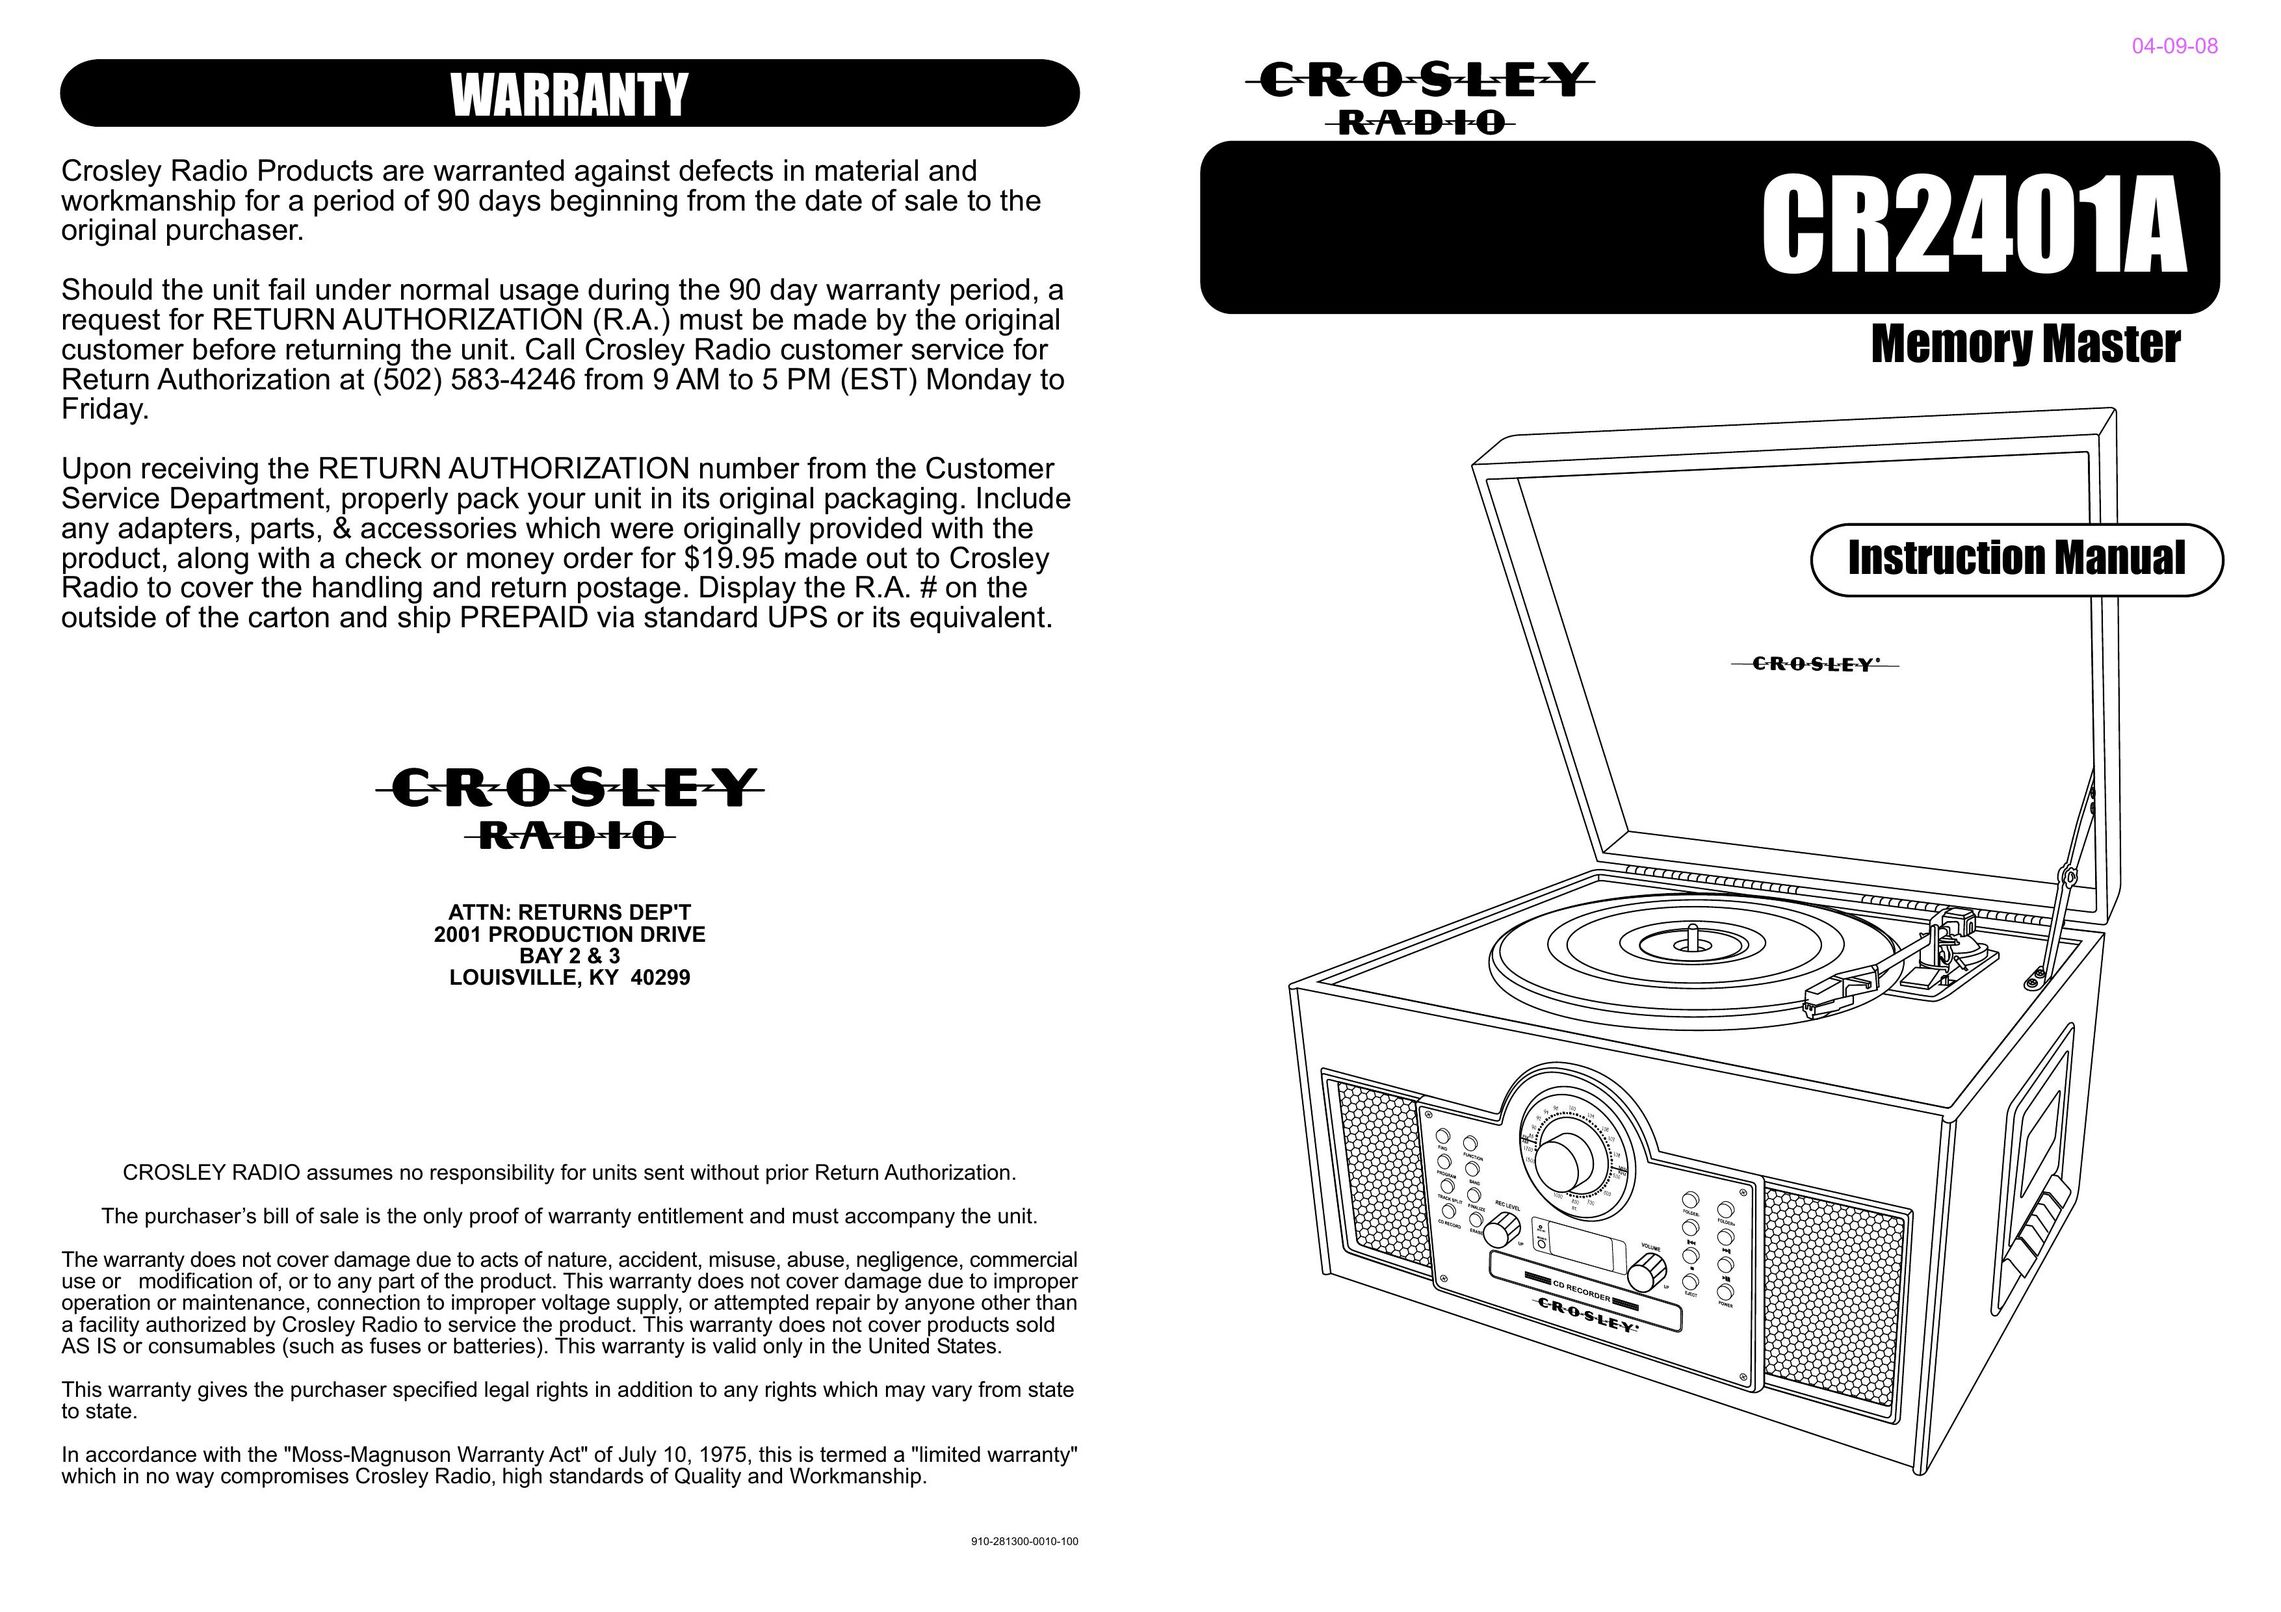 Crosley Radio CR2401A CD Player User Manual